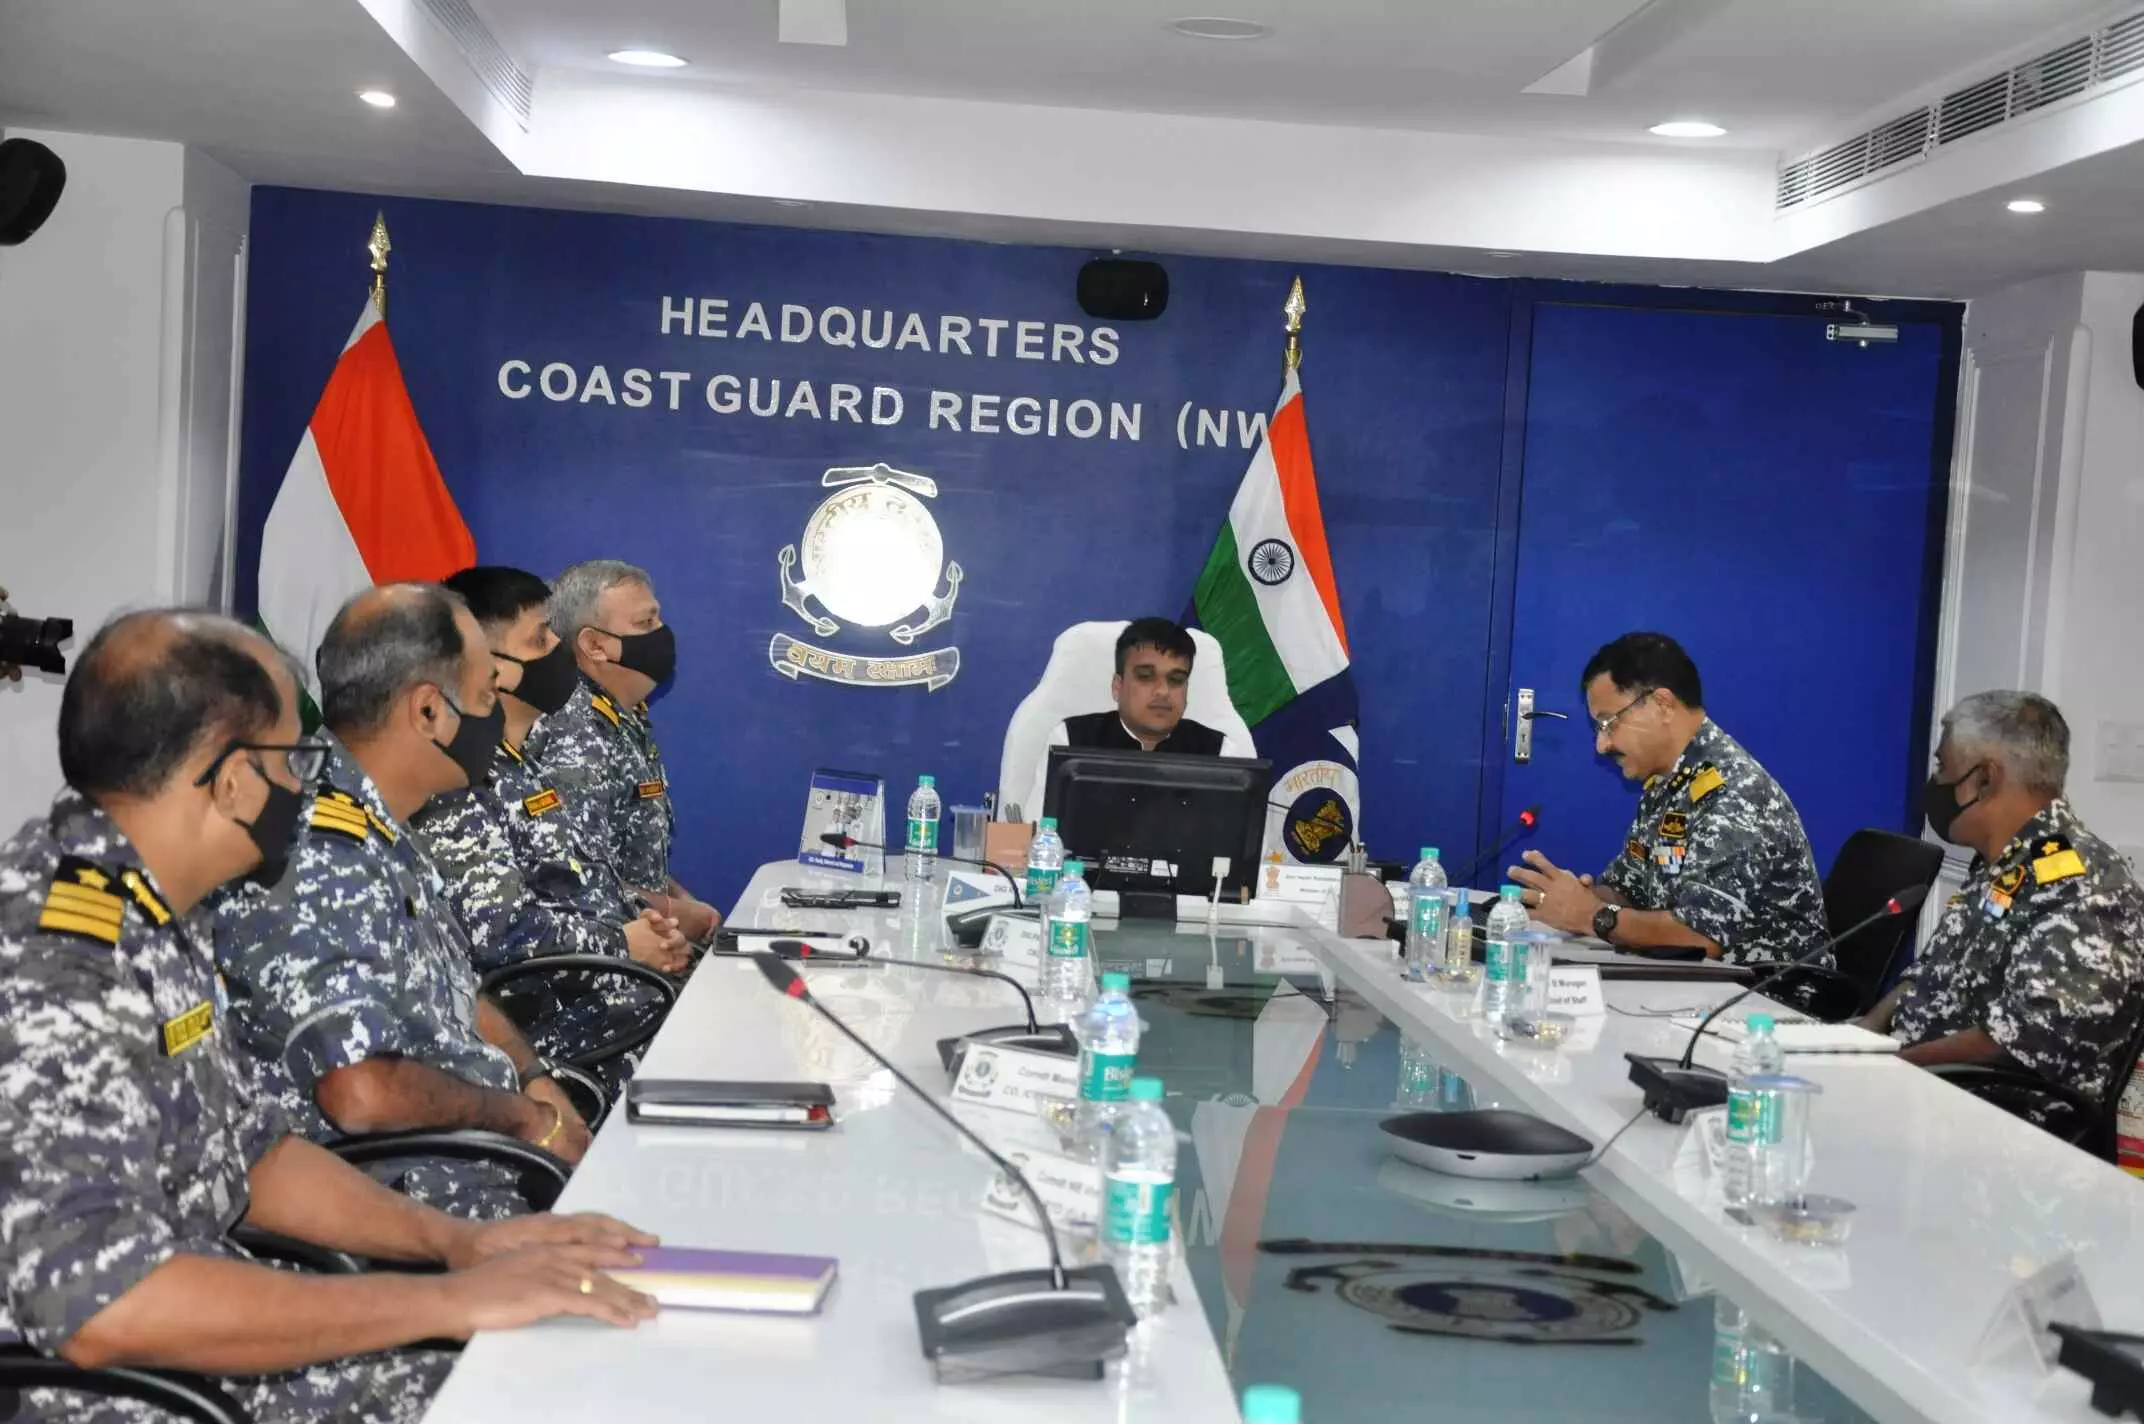 Harsh Sanghavi MoS Home, Gujarat visited Indian Coast Guard Regional Headquarters at Gandhinagar